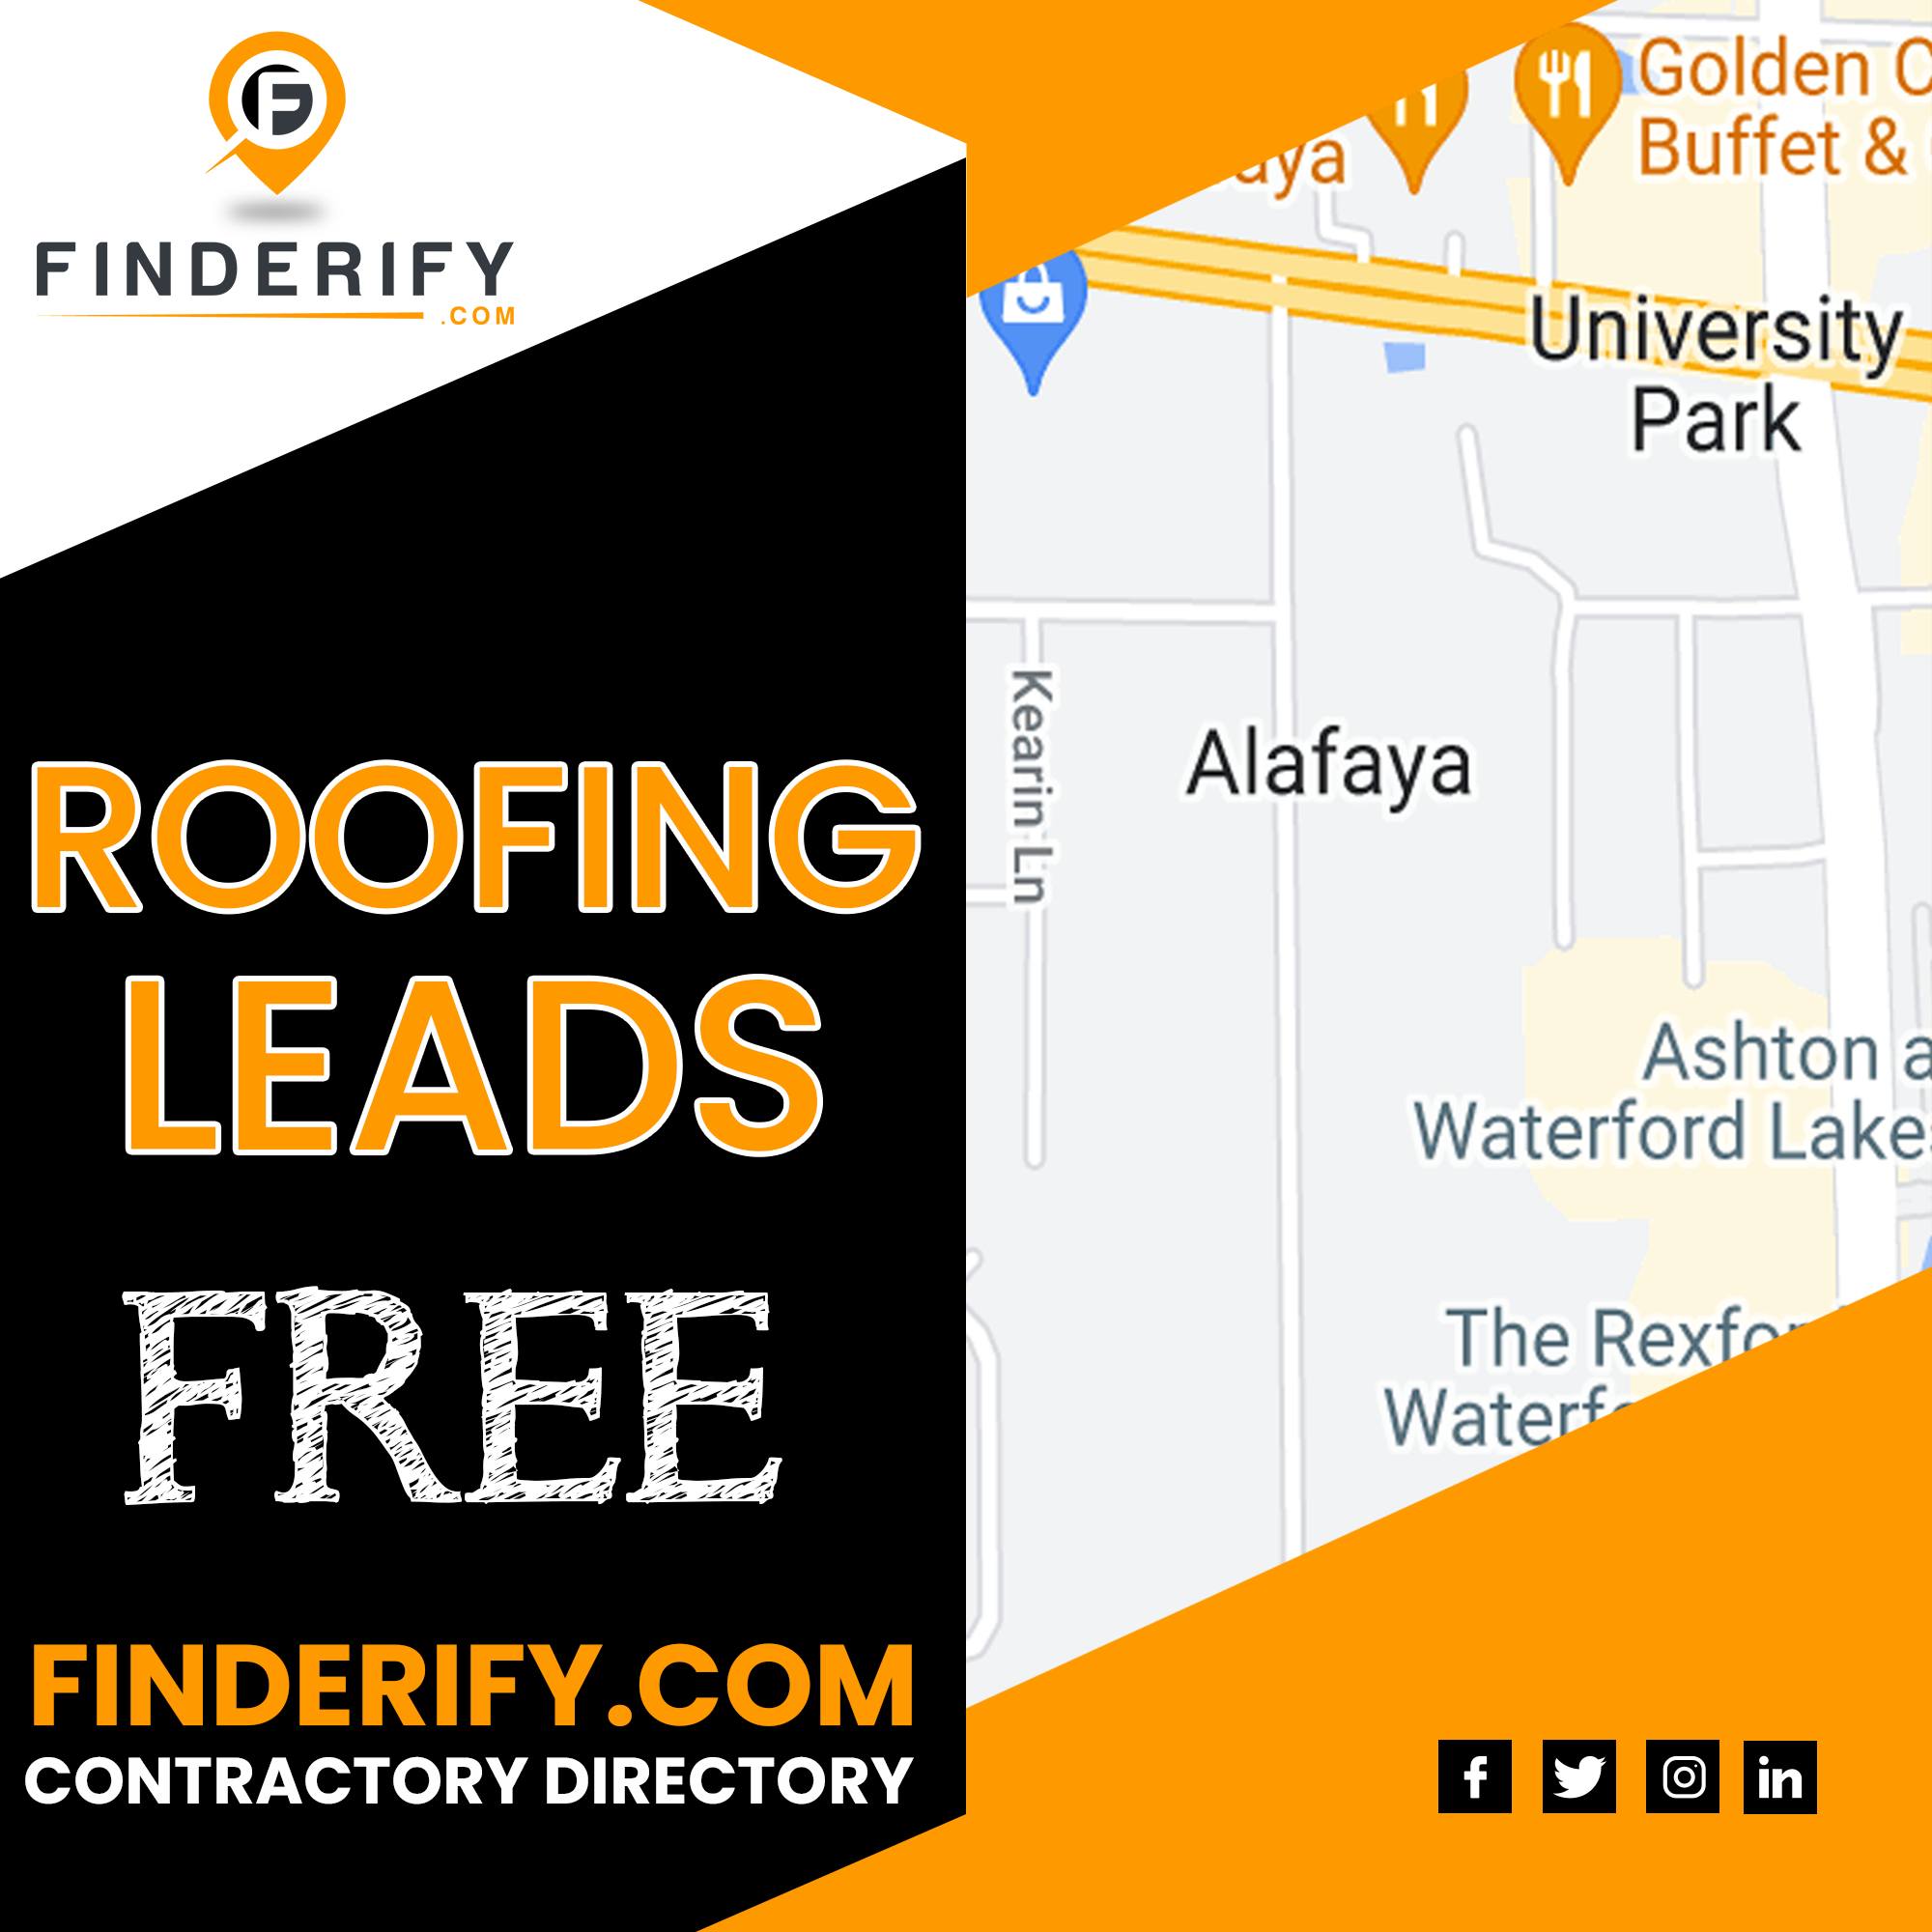 Alafaya, FL Home in Need of Roof Repair